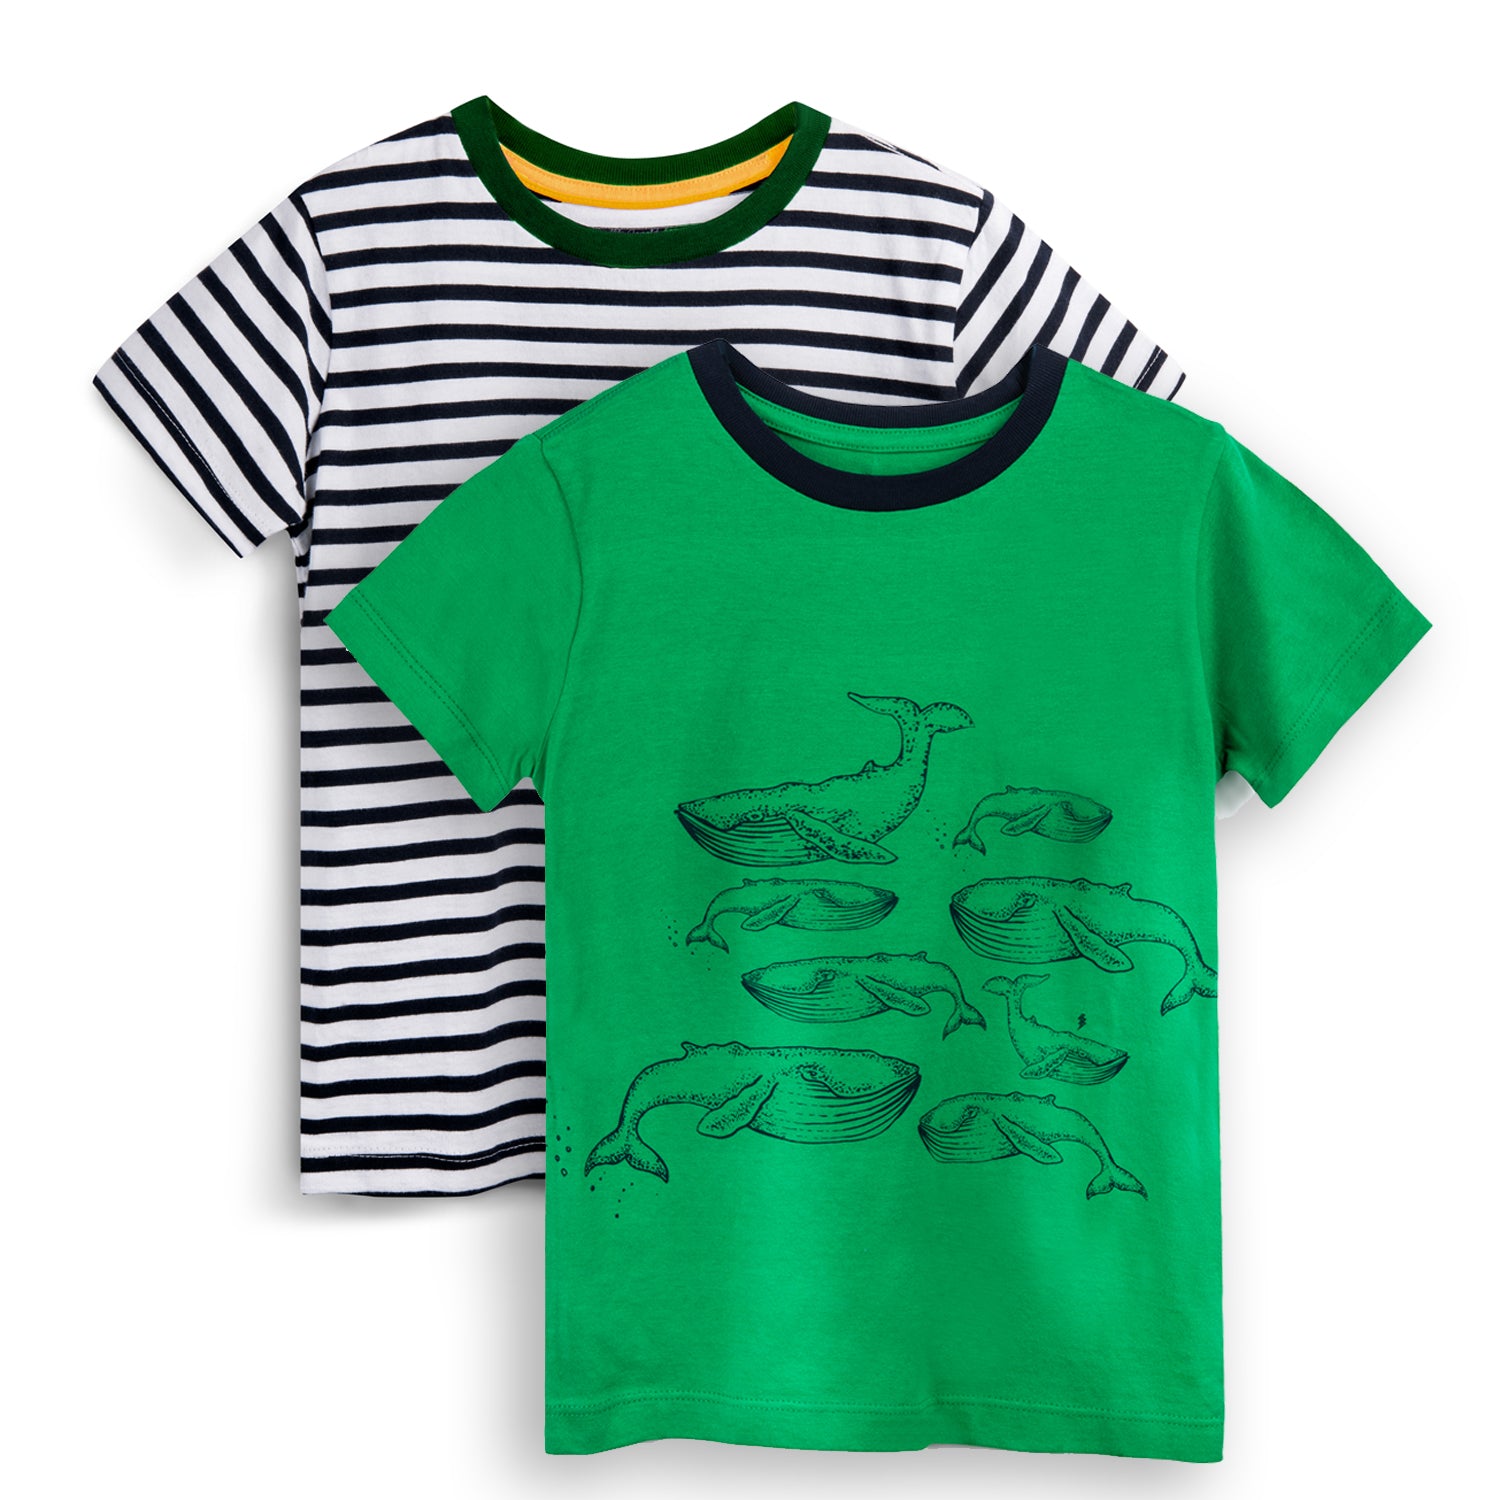 Organic Cotton Kids Shirts - Graphic Tee 2-Pack FINAL SALE